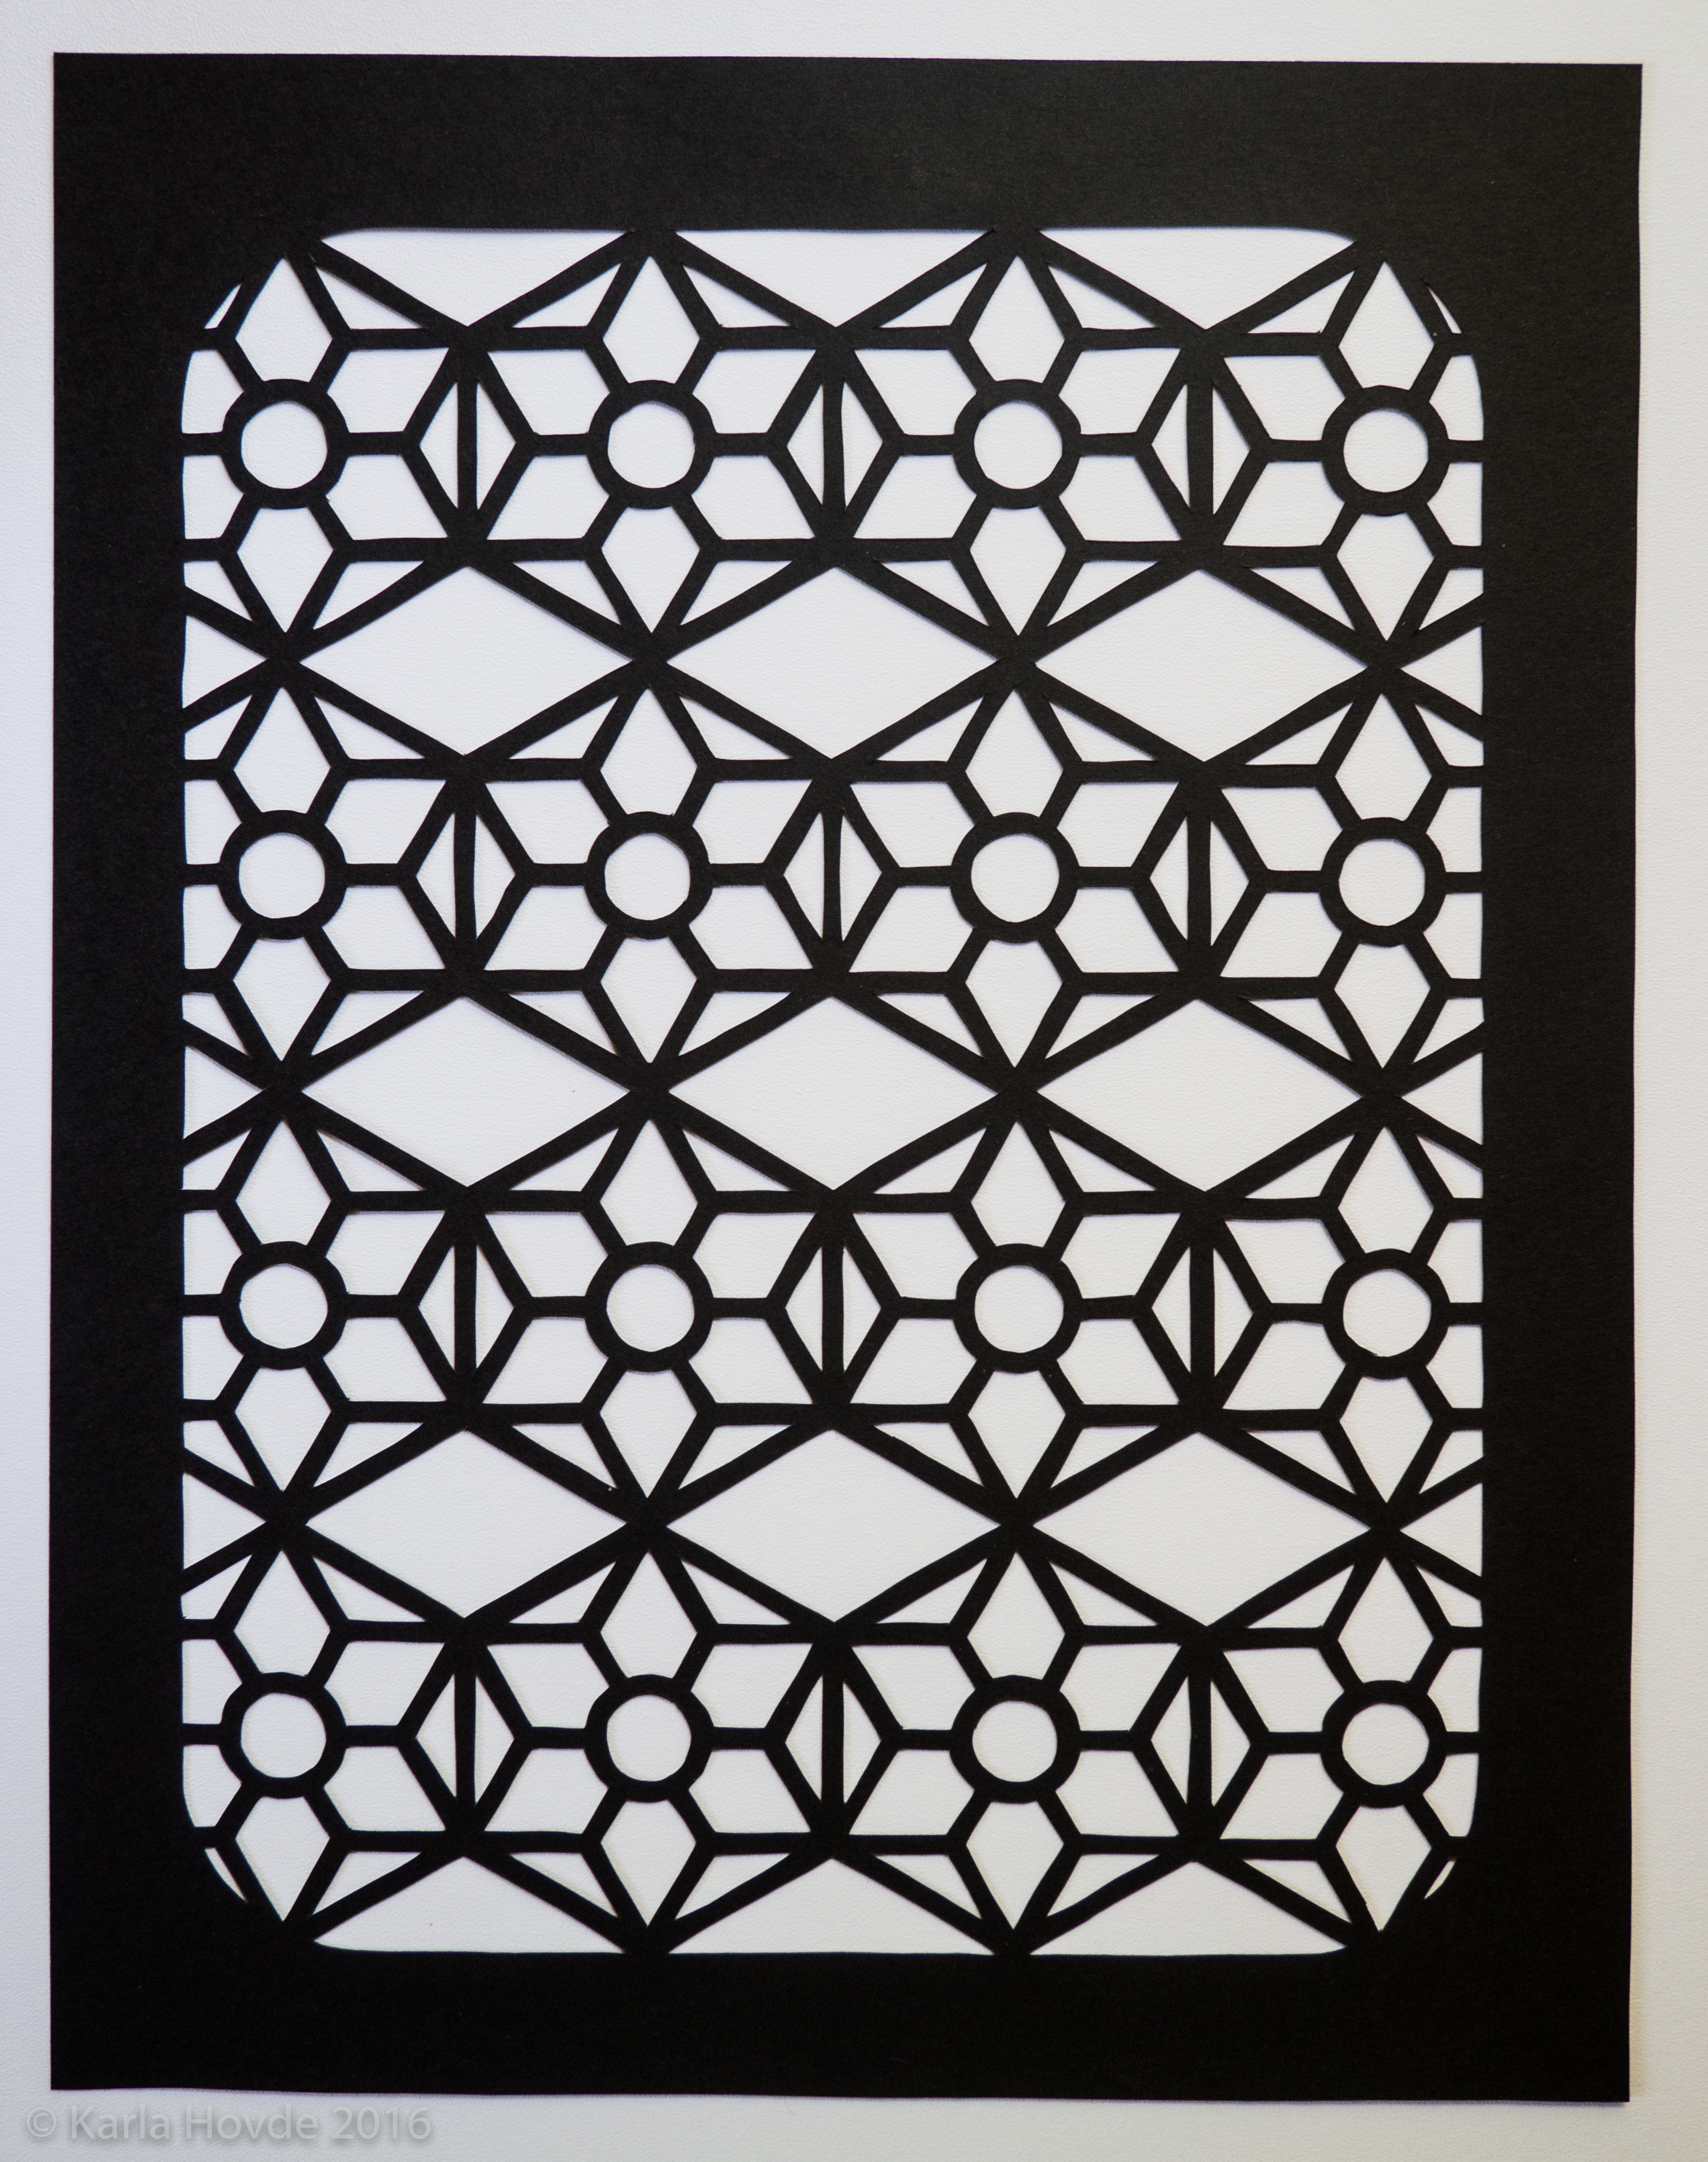 Paper cutting art in black paper shows delicate geometric arabesque pattern.